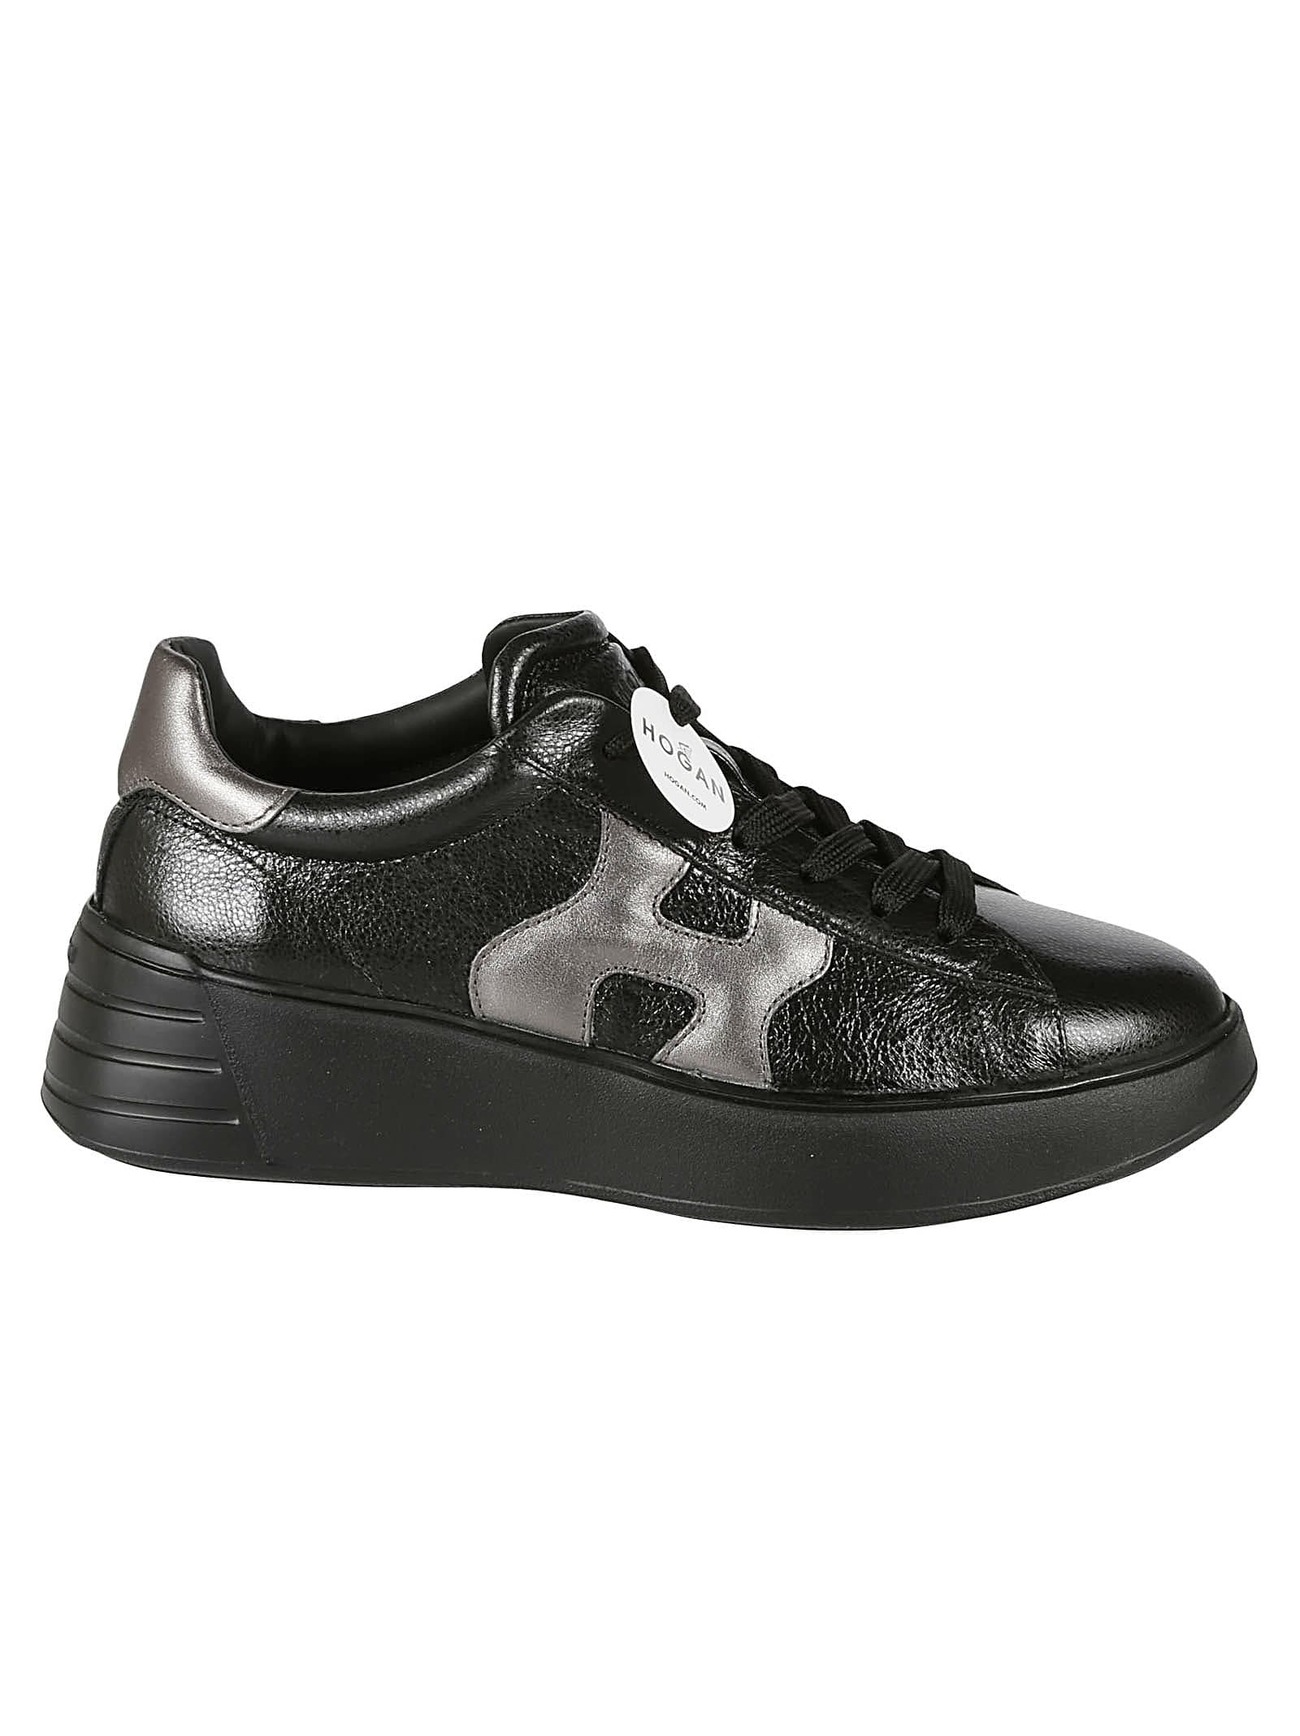 Hogan H562 Rebel Sneakers in black